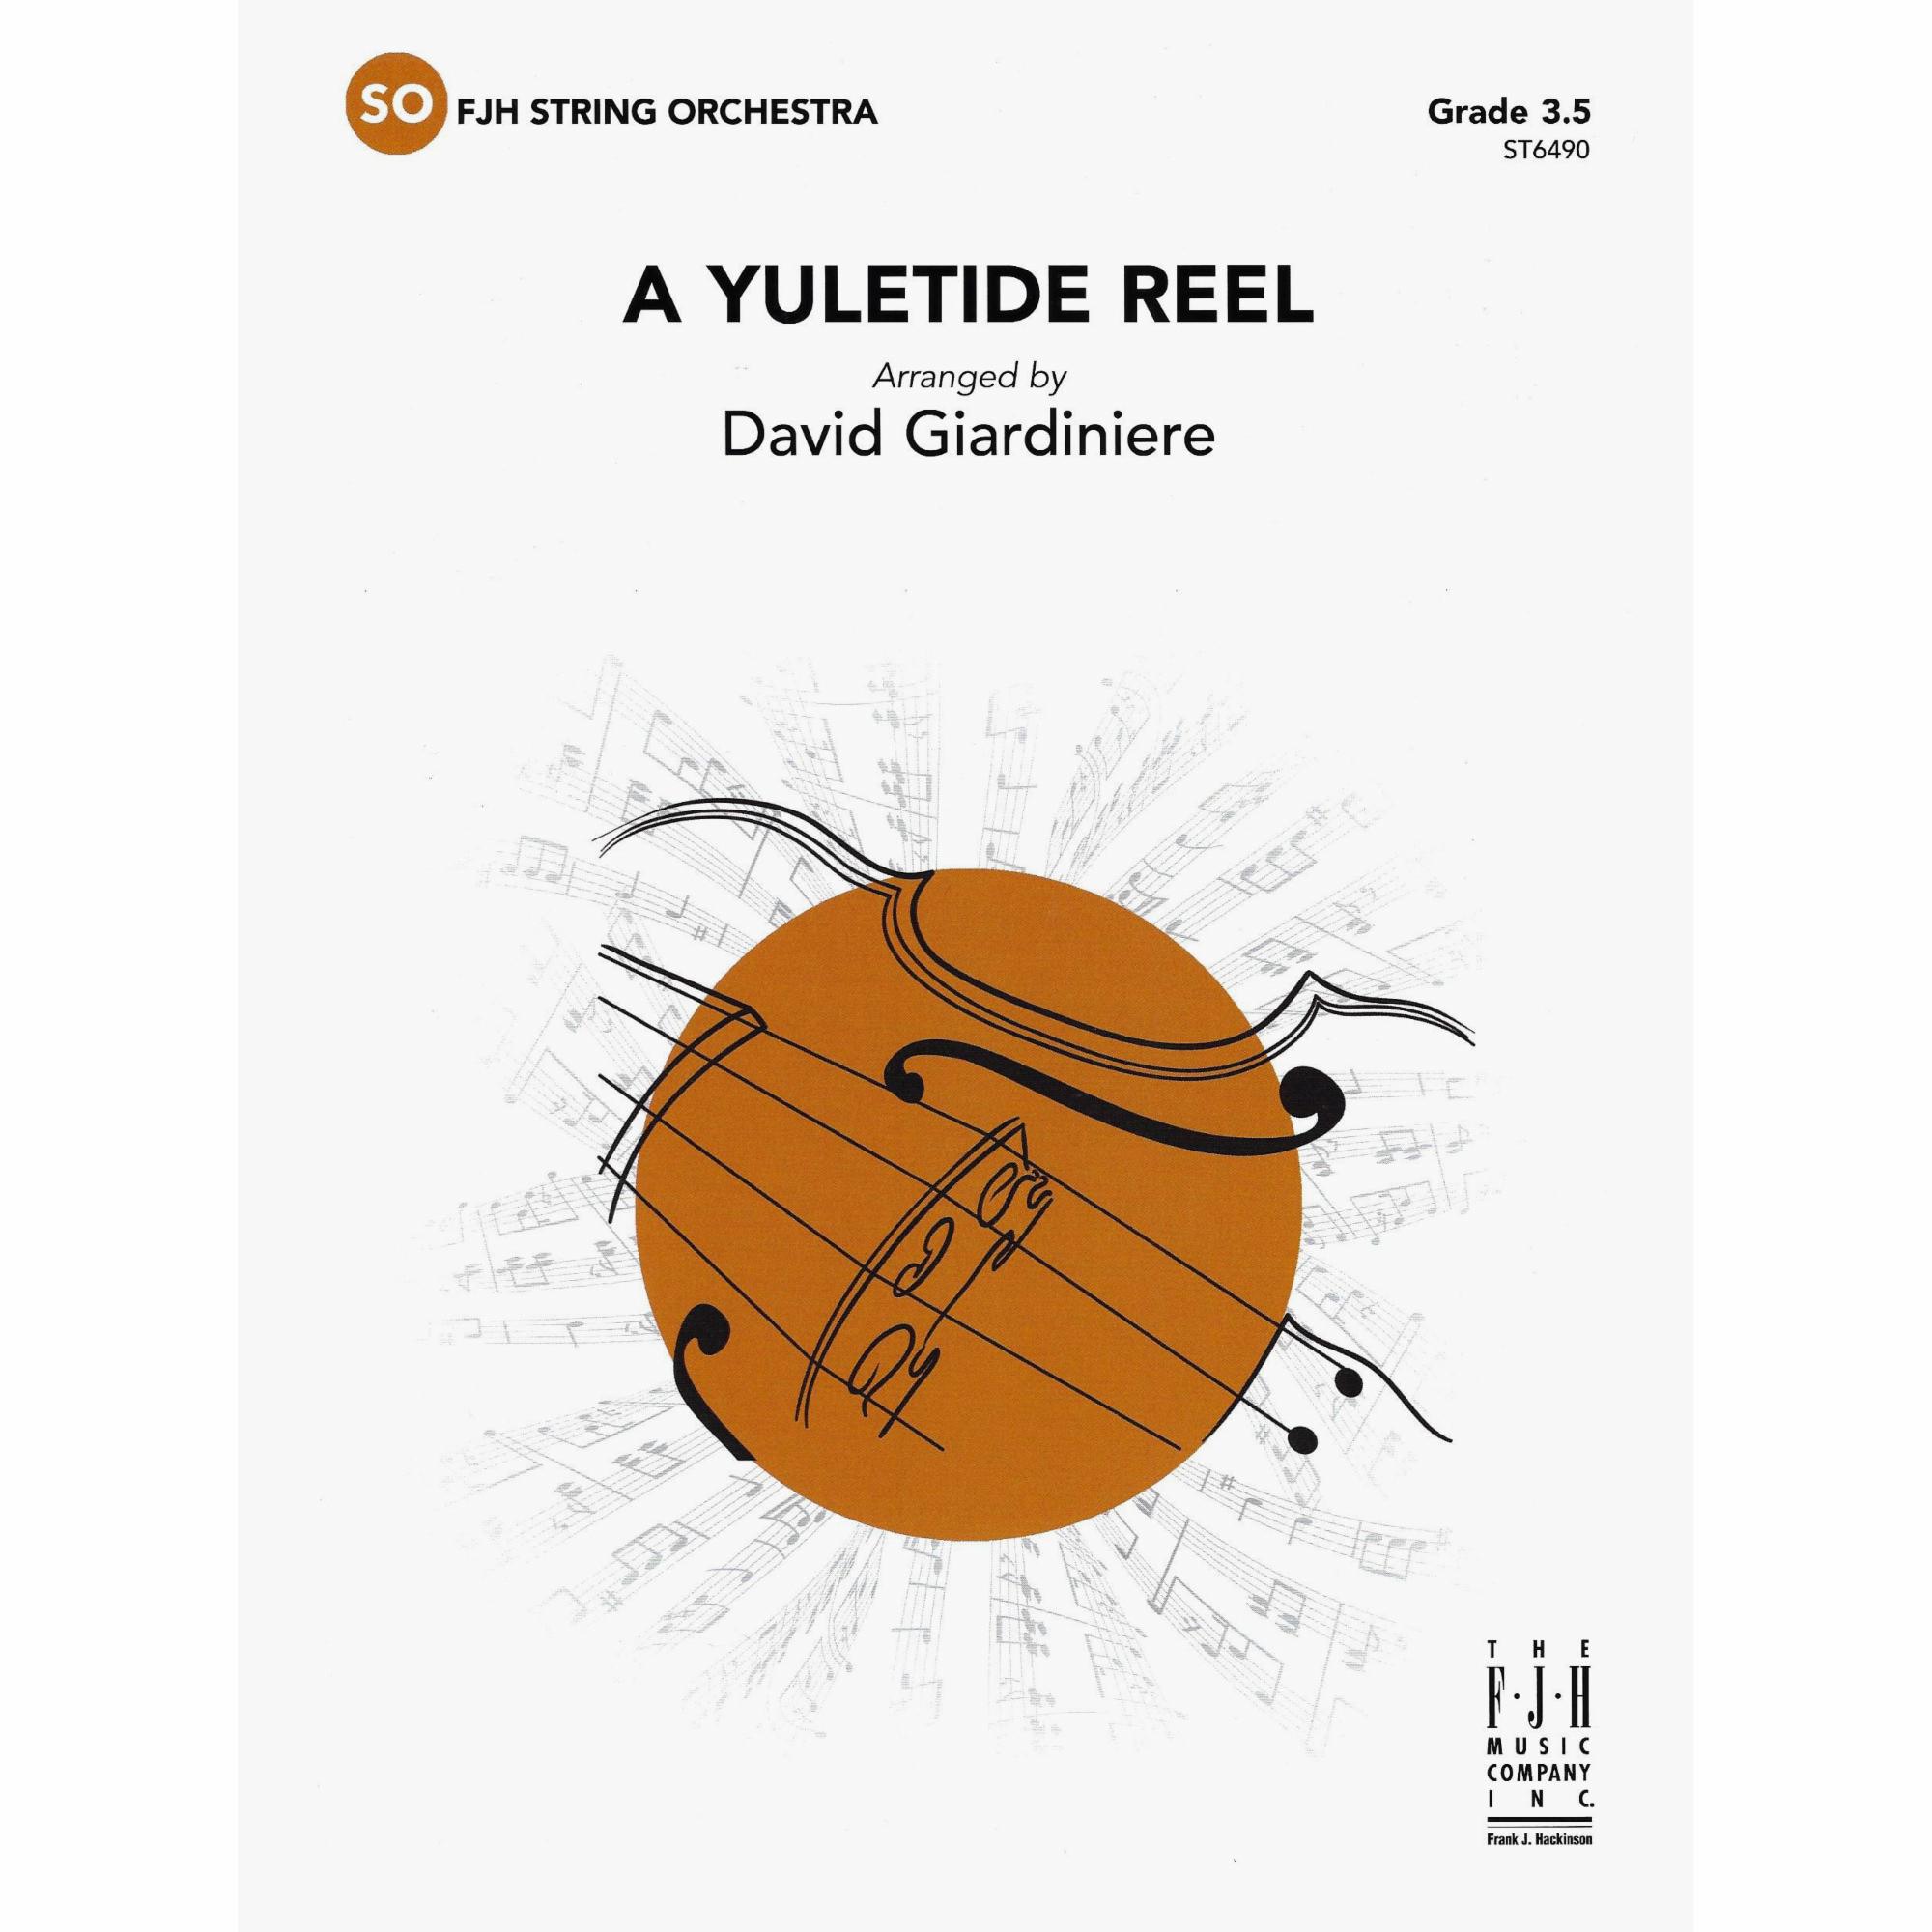 A Yuletide Reel for String Orchestra